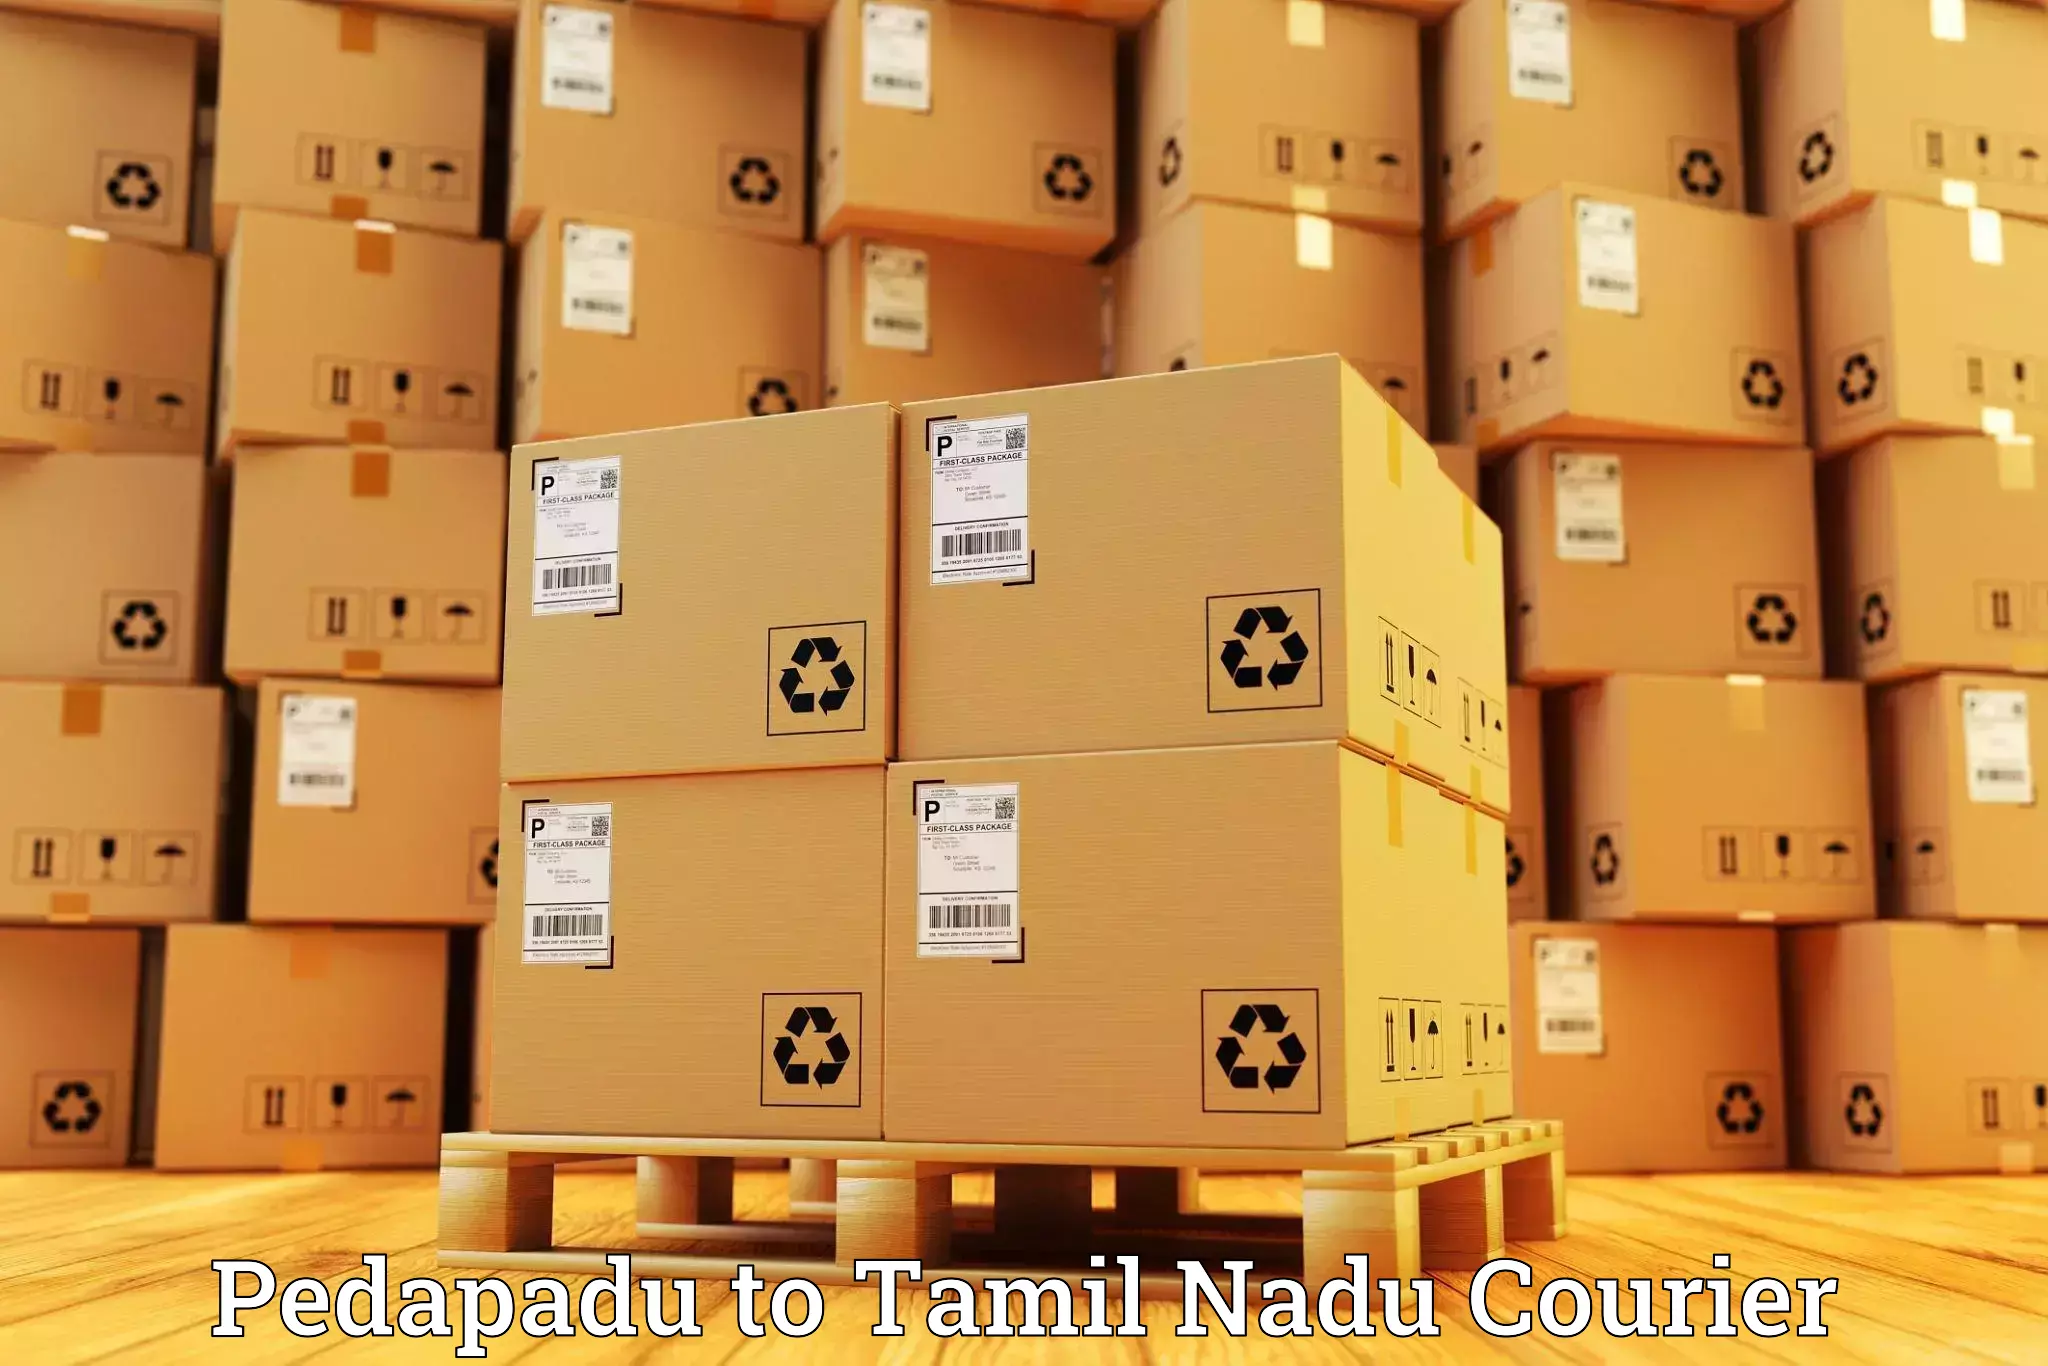 Shipping and handling Pedapadu to Sivaganga